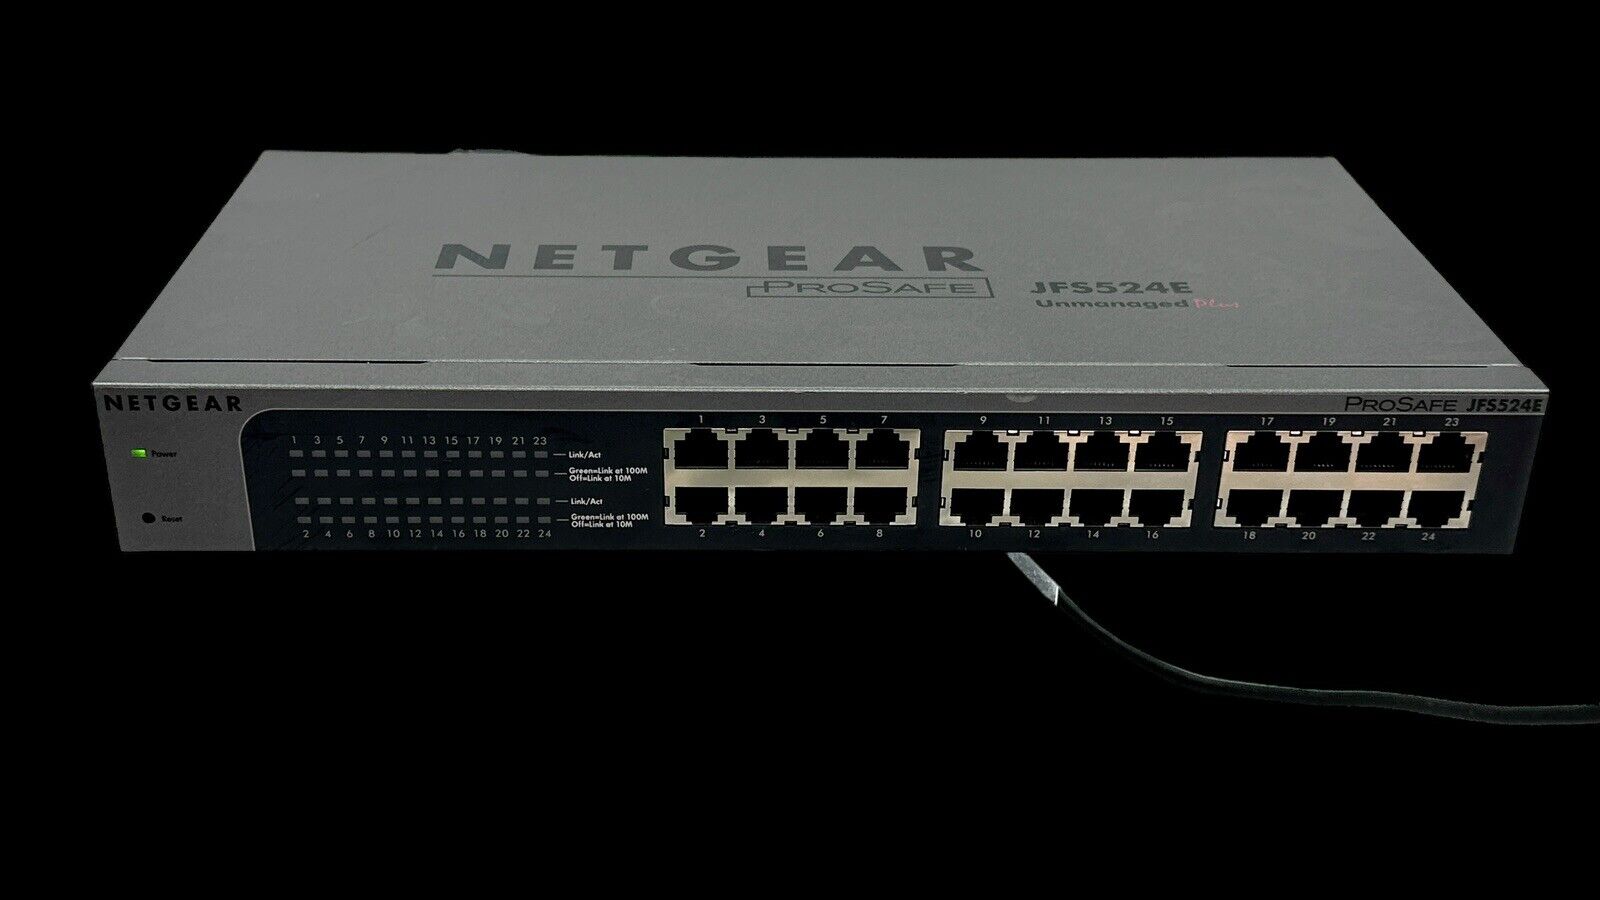 Netgear Prosafe JFS524E 24 Port 10/100 Unmanaged Plus Network Switch Tested